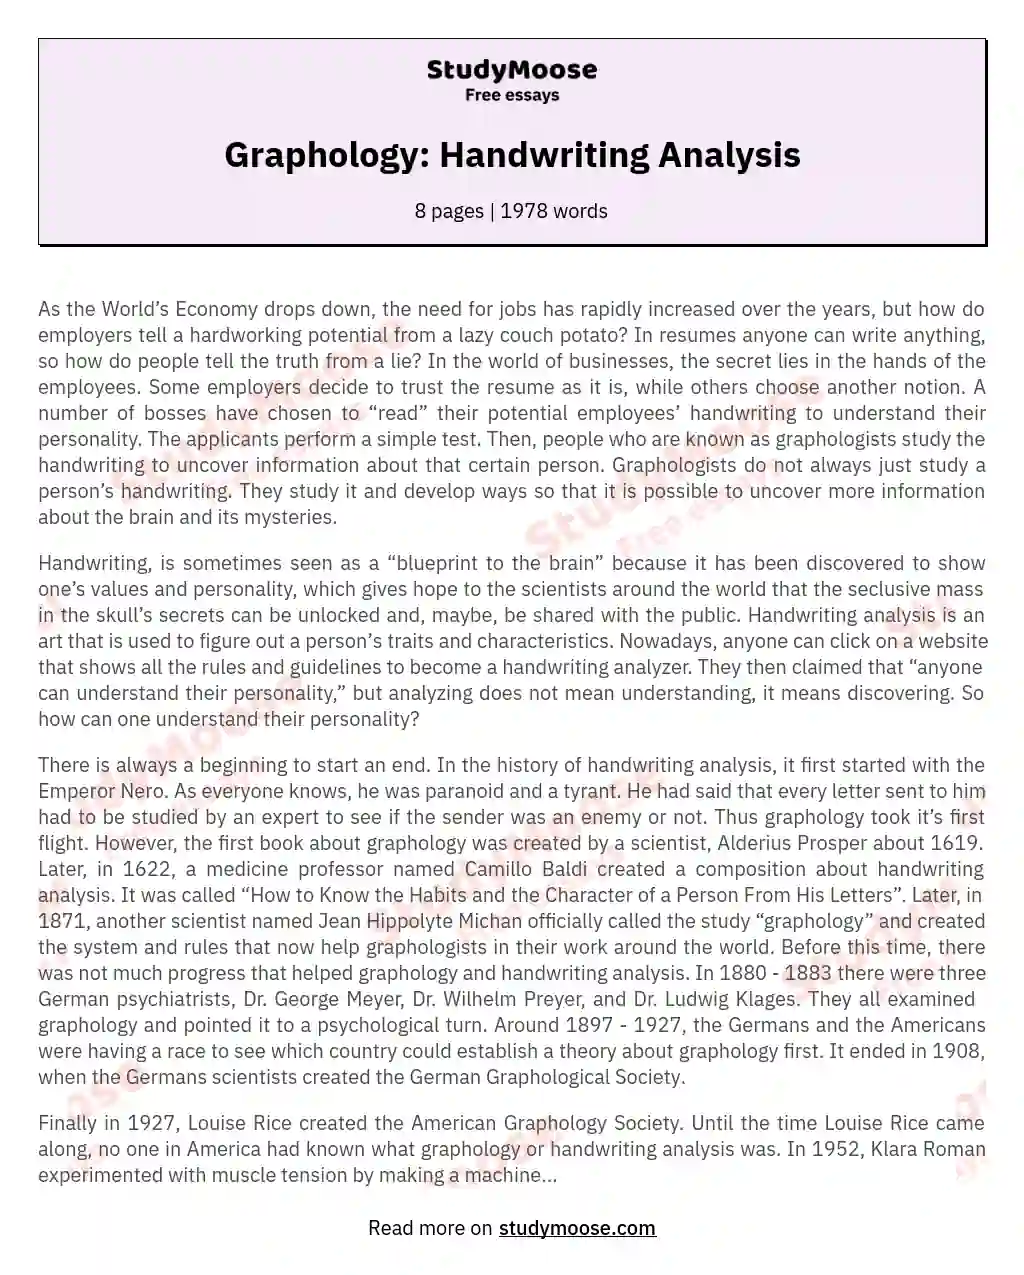 Graphology: Handwriting Analysis essay